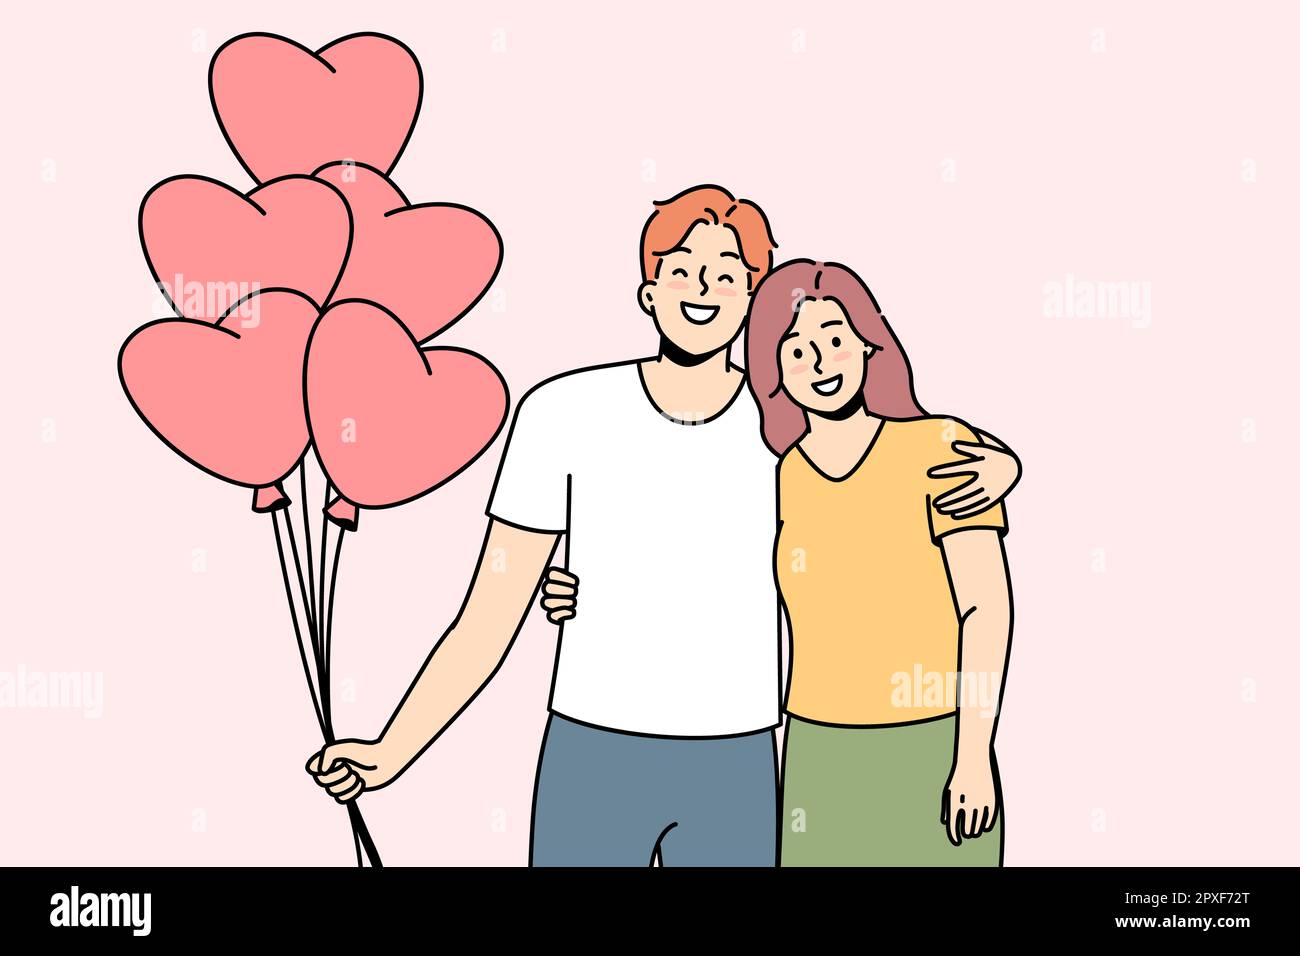 Big Love Heart Hug Valentine or Anniversary Card - Fun Sketch